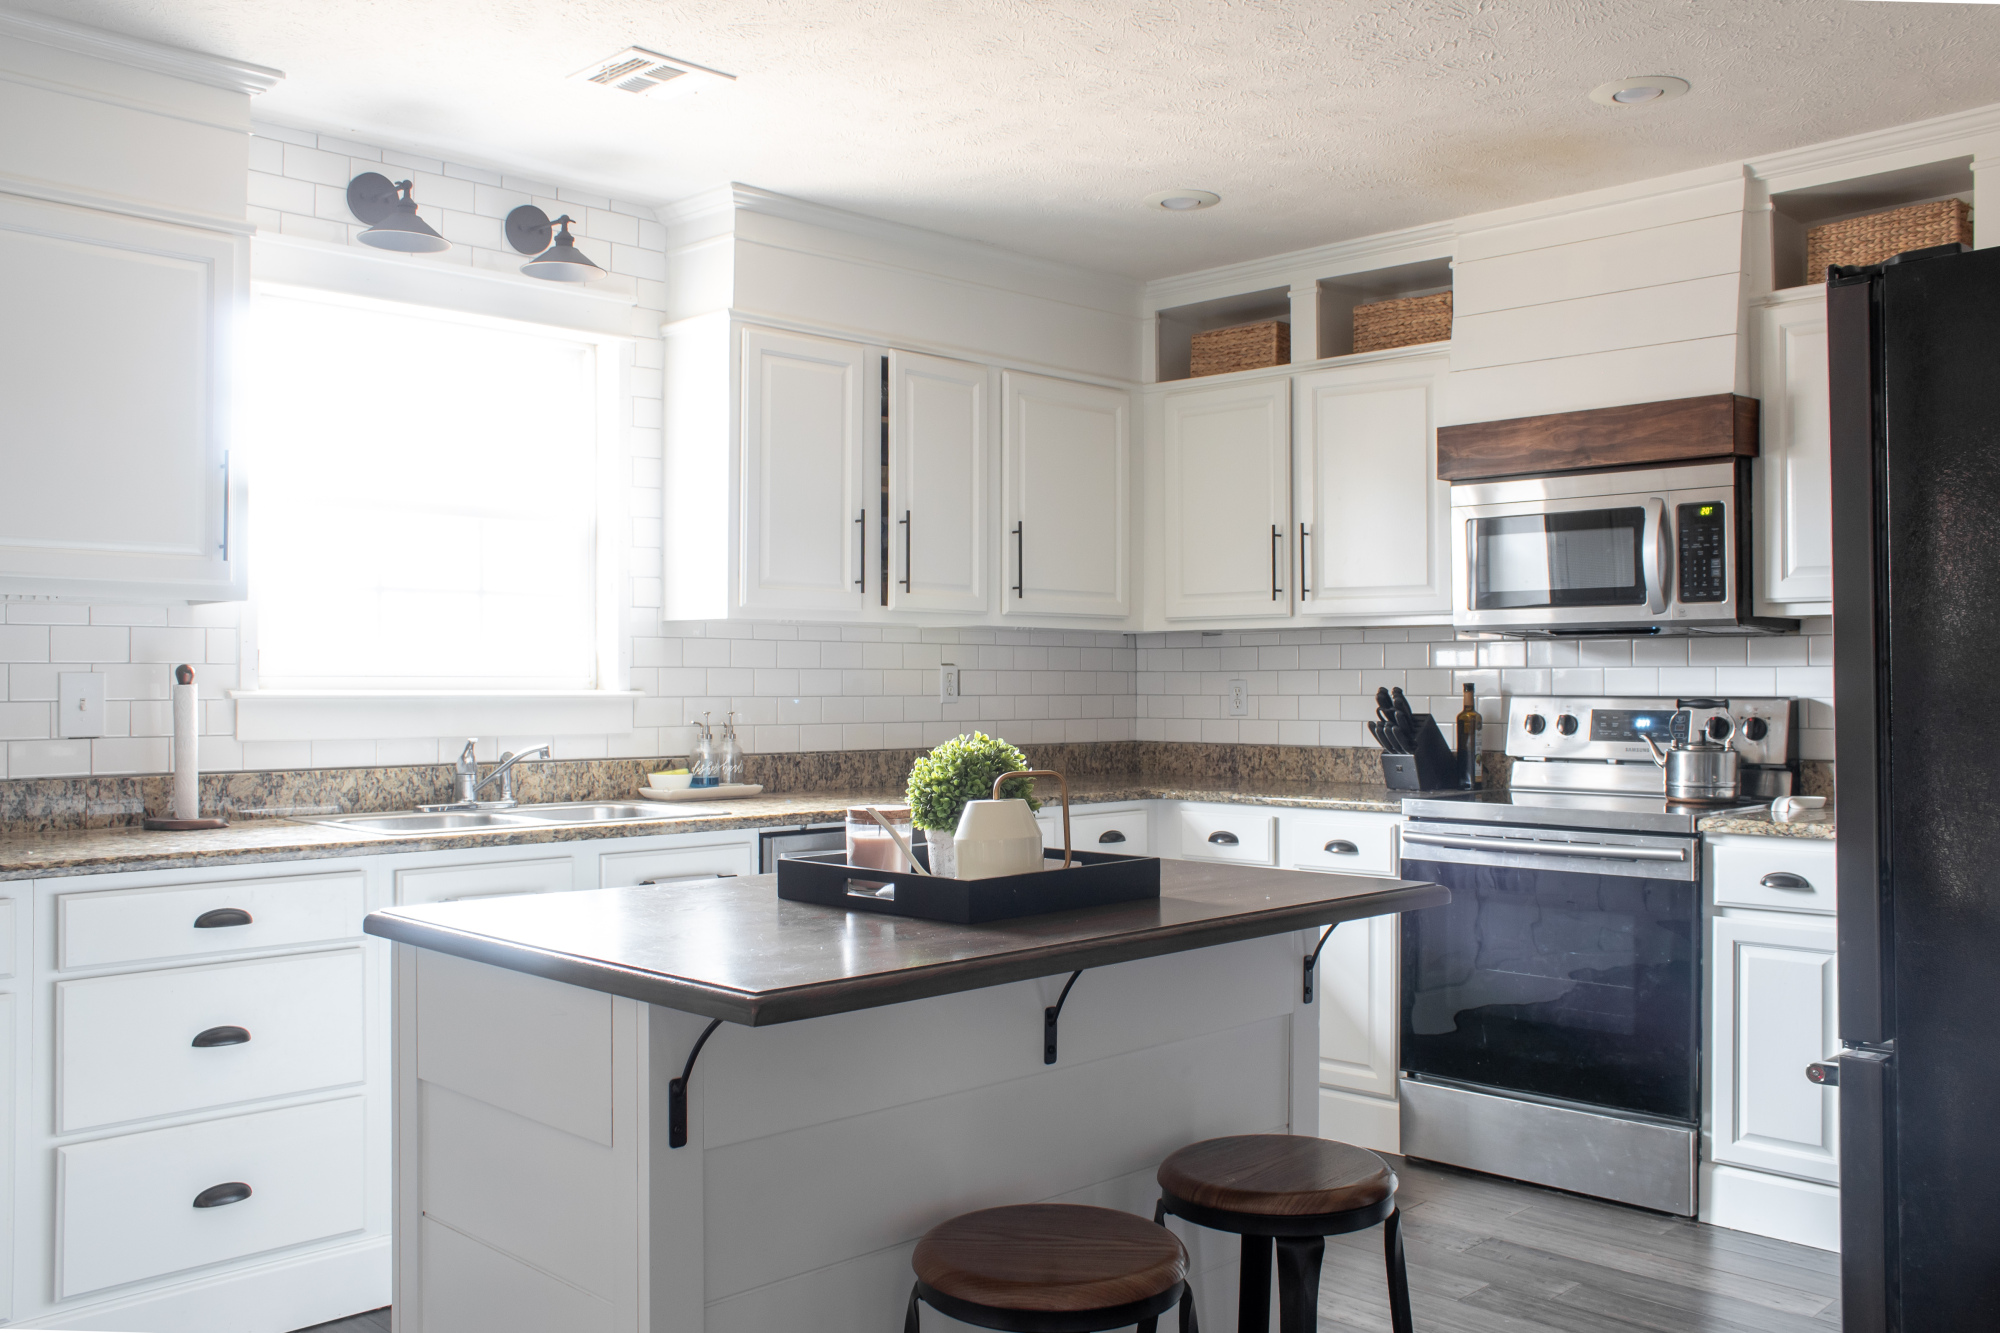 Existing Granite Countertops, White Kitchen Cabinets With Dark Brown Granite Countertops